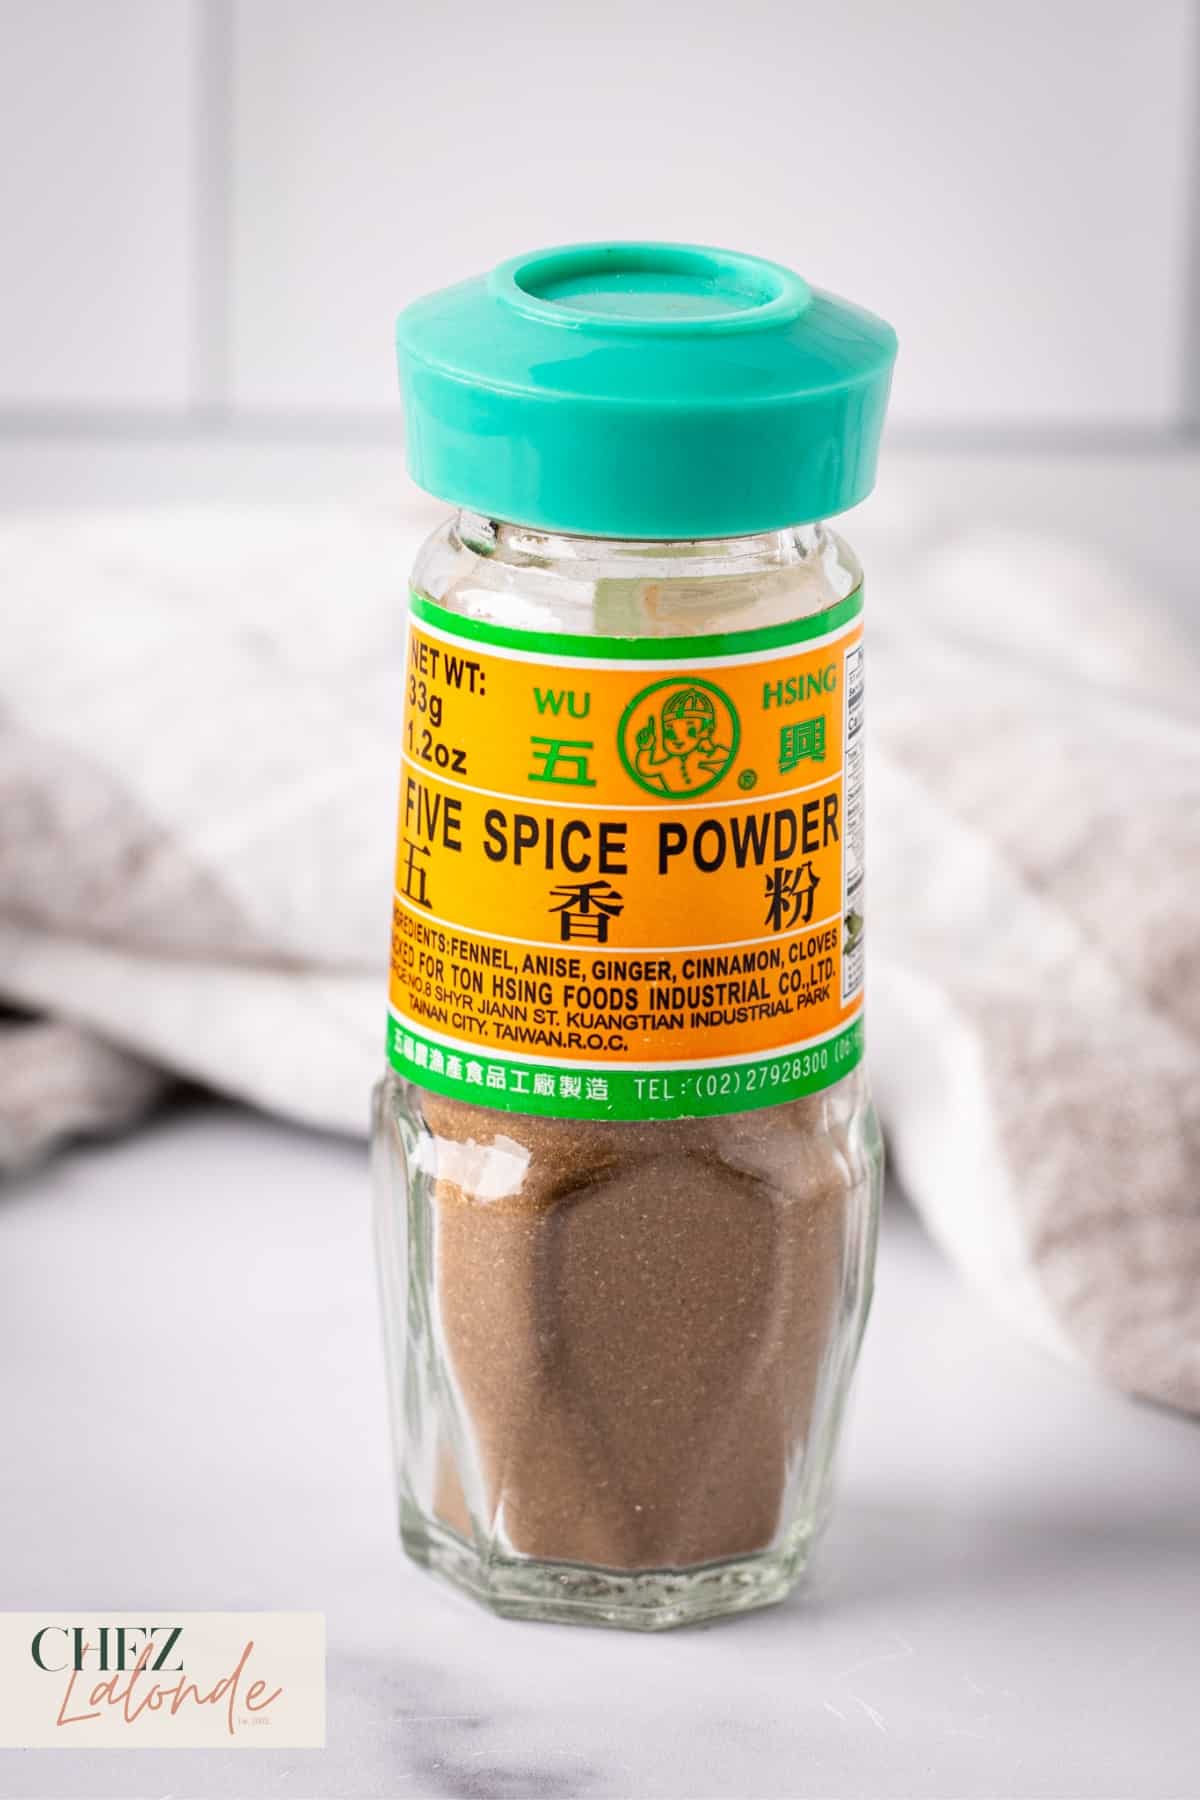 A bottle of five spice powder.